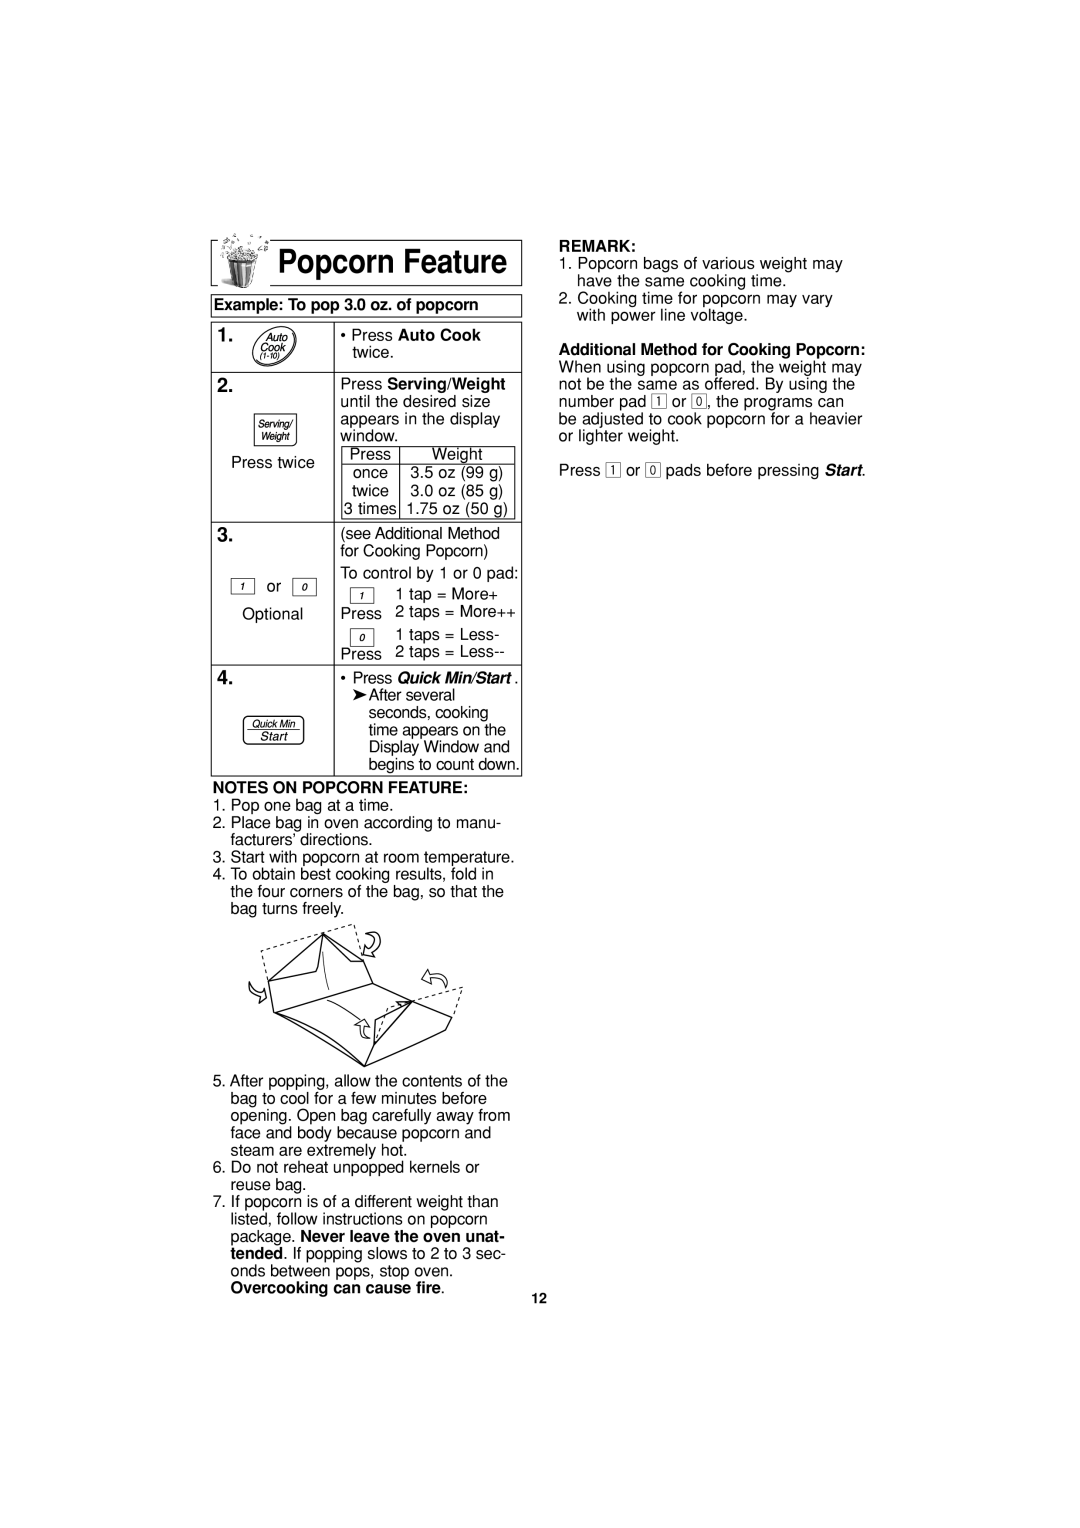 Panasonic NN-S334 Popcorn Feature, Example: To pop 3.0 oz. of popcorn, • Press Auto Cook, 4.• Press Quick Min/Start 